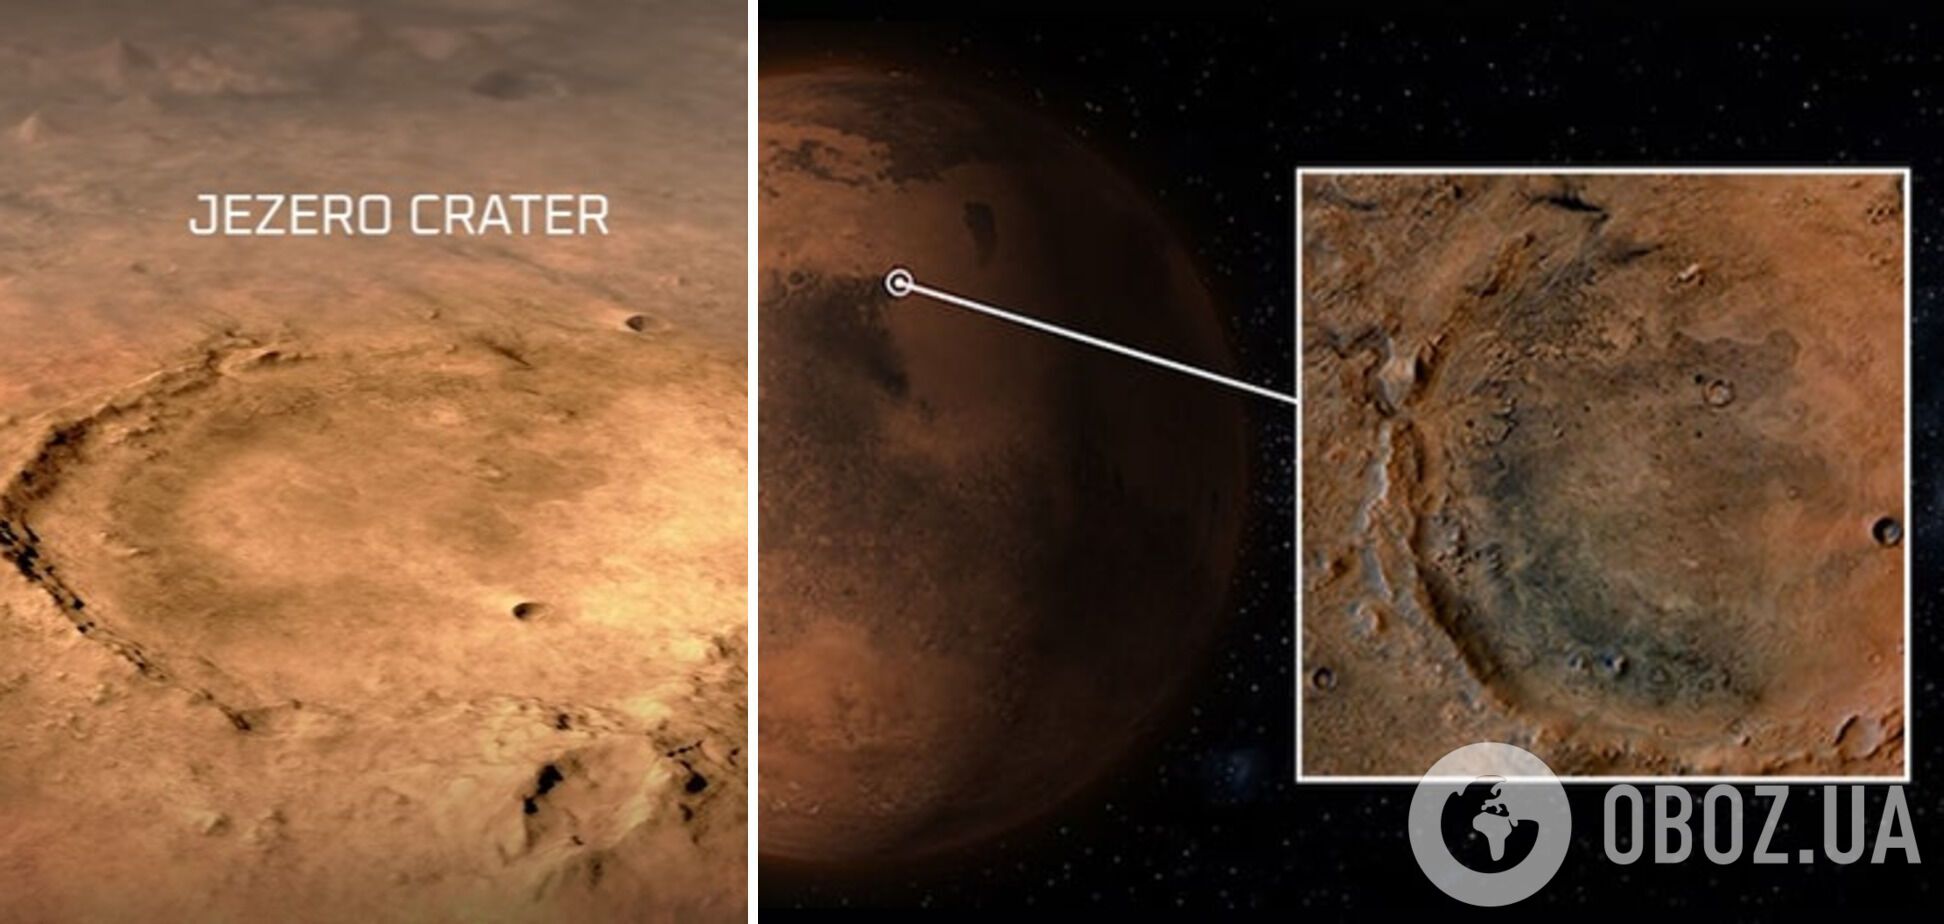 Кратер Єзеро на Марсі.